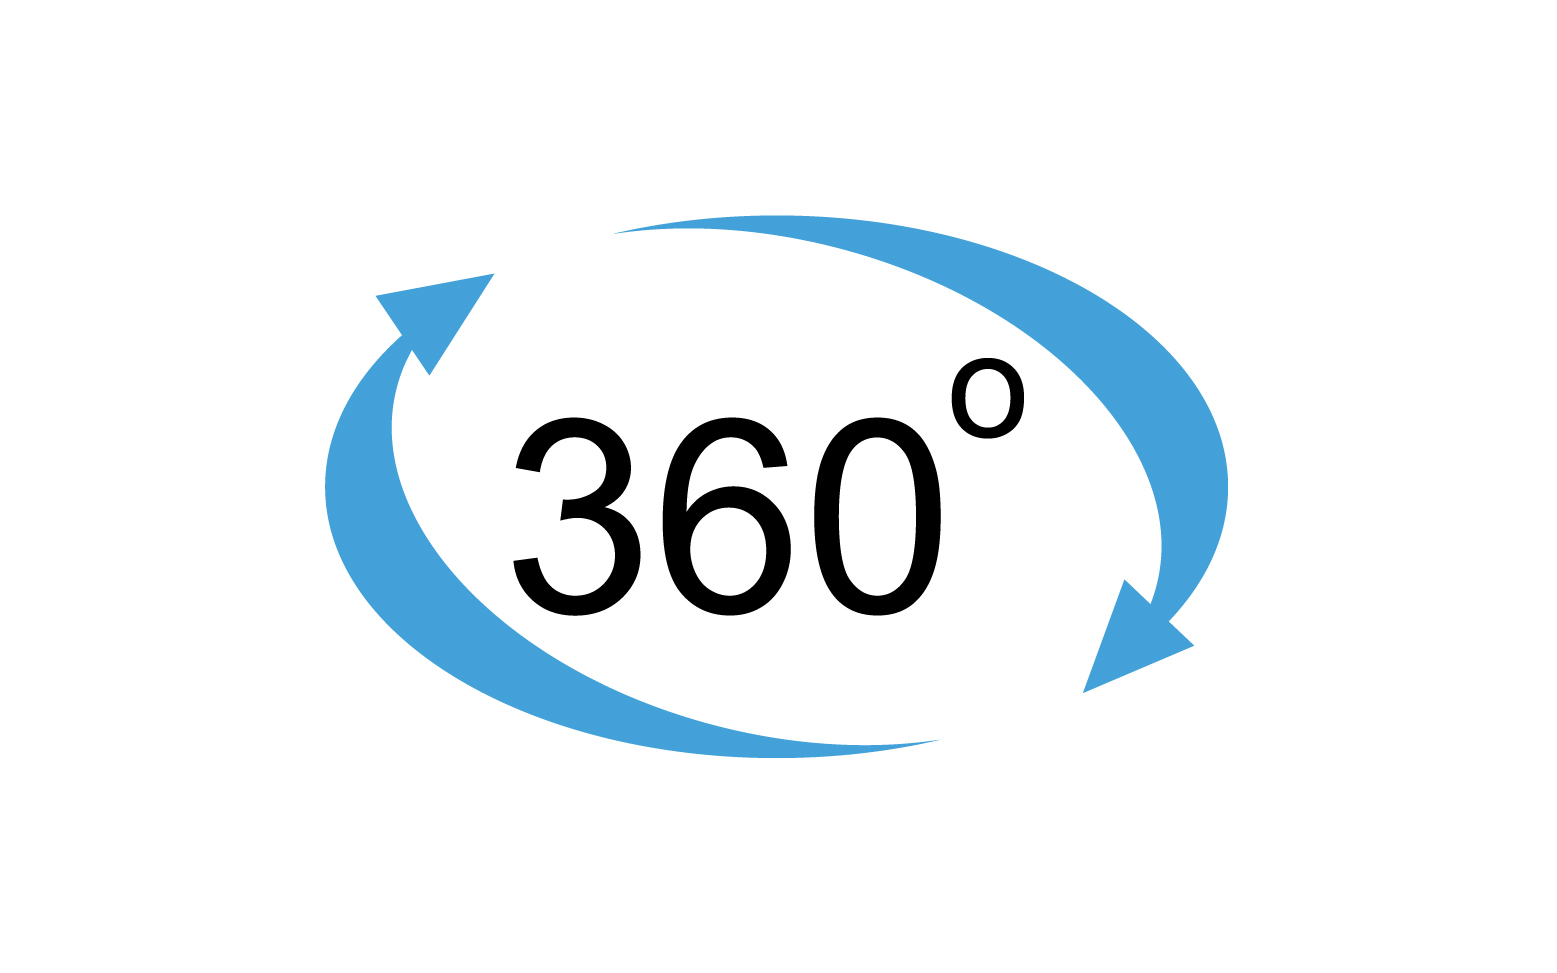 360 degree angle rotation icon symbol logo version v16